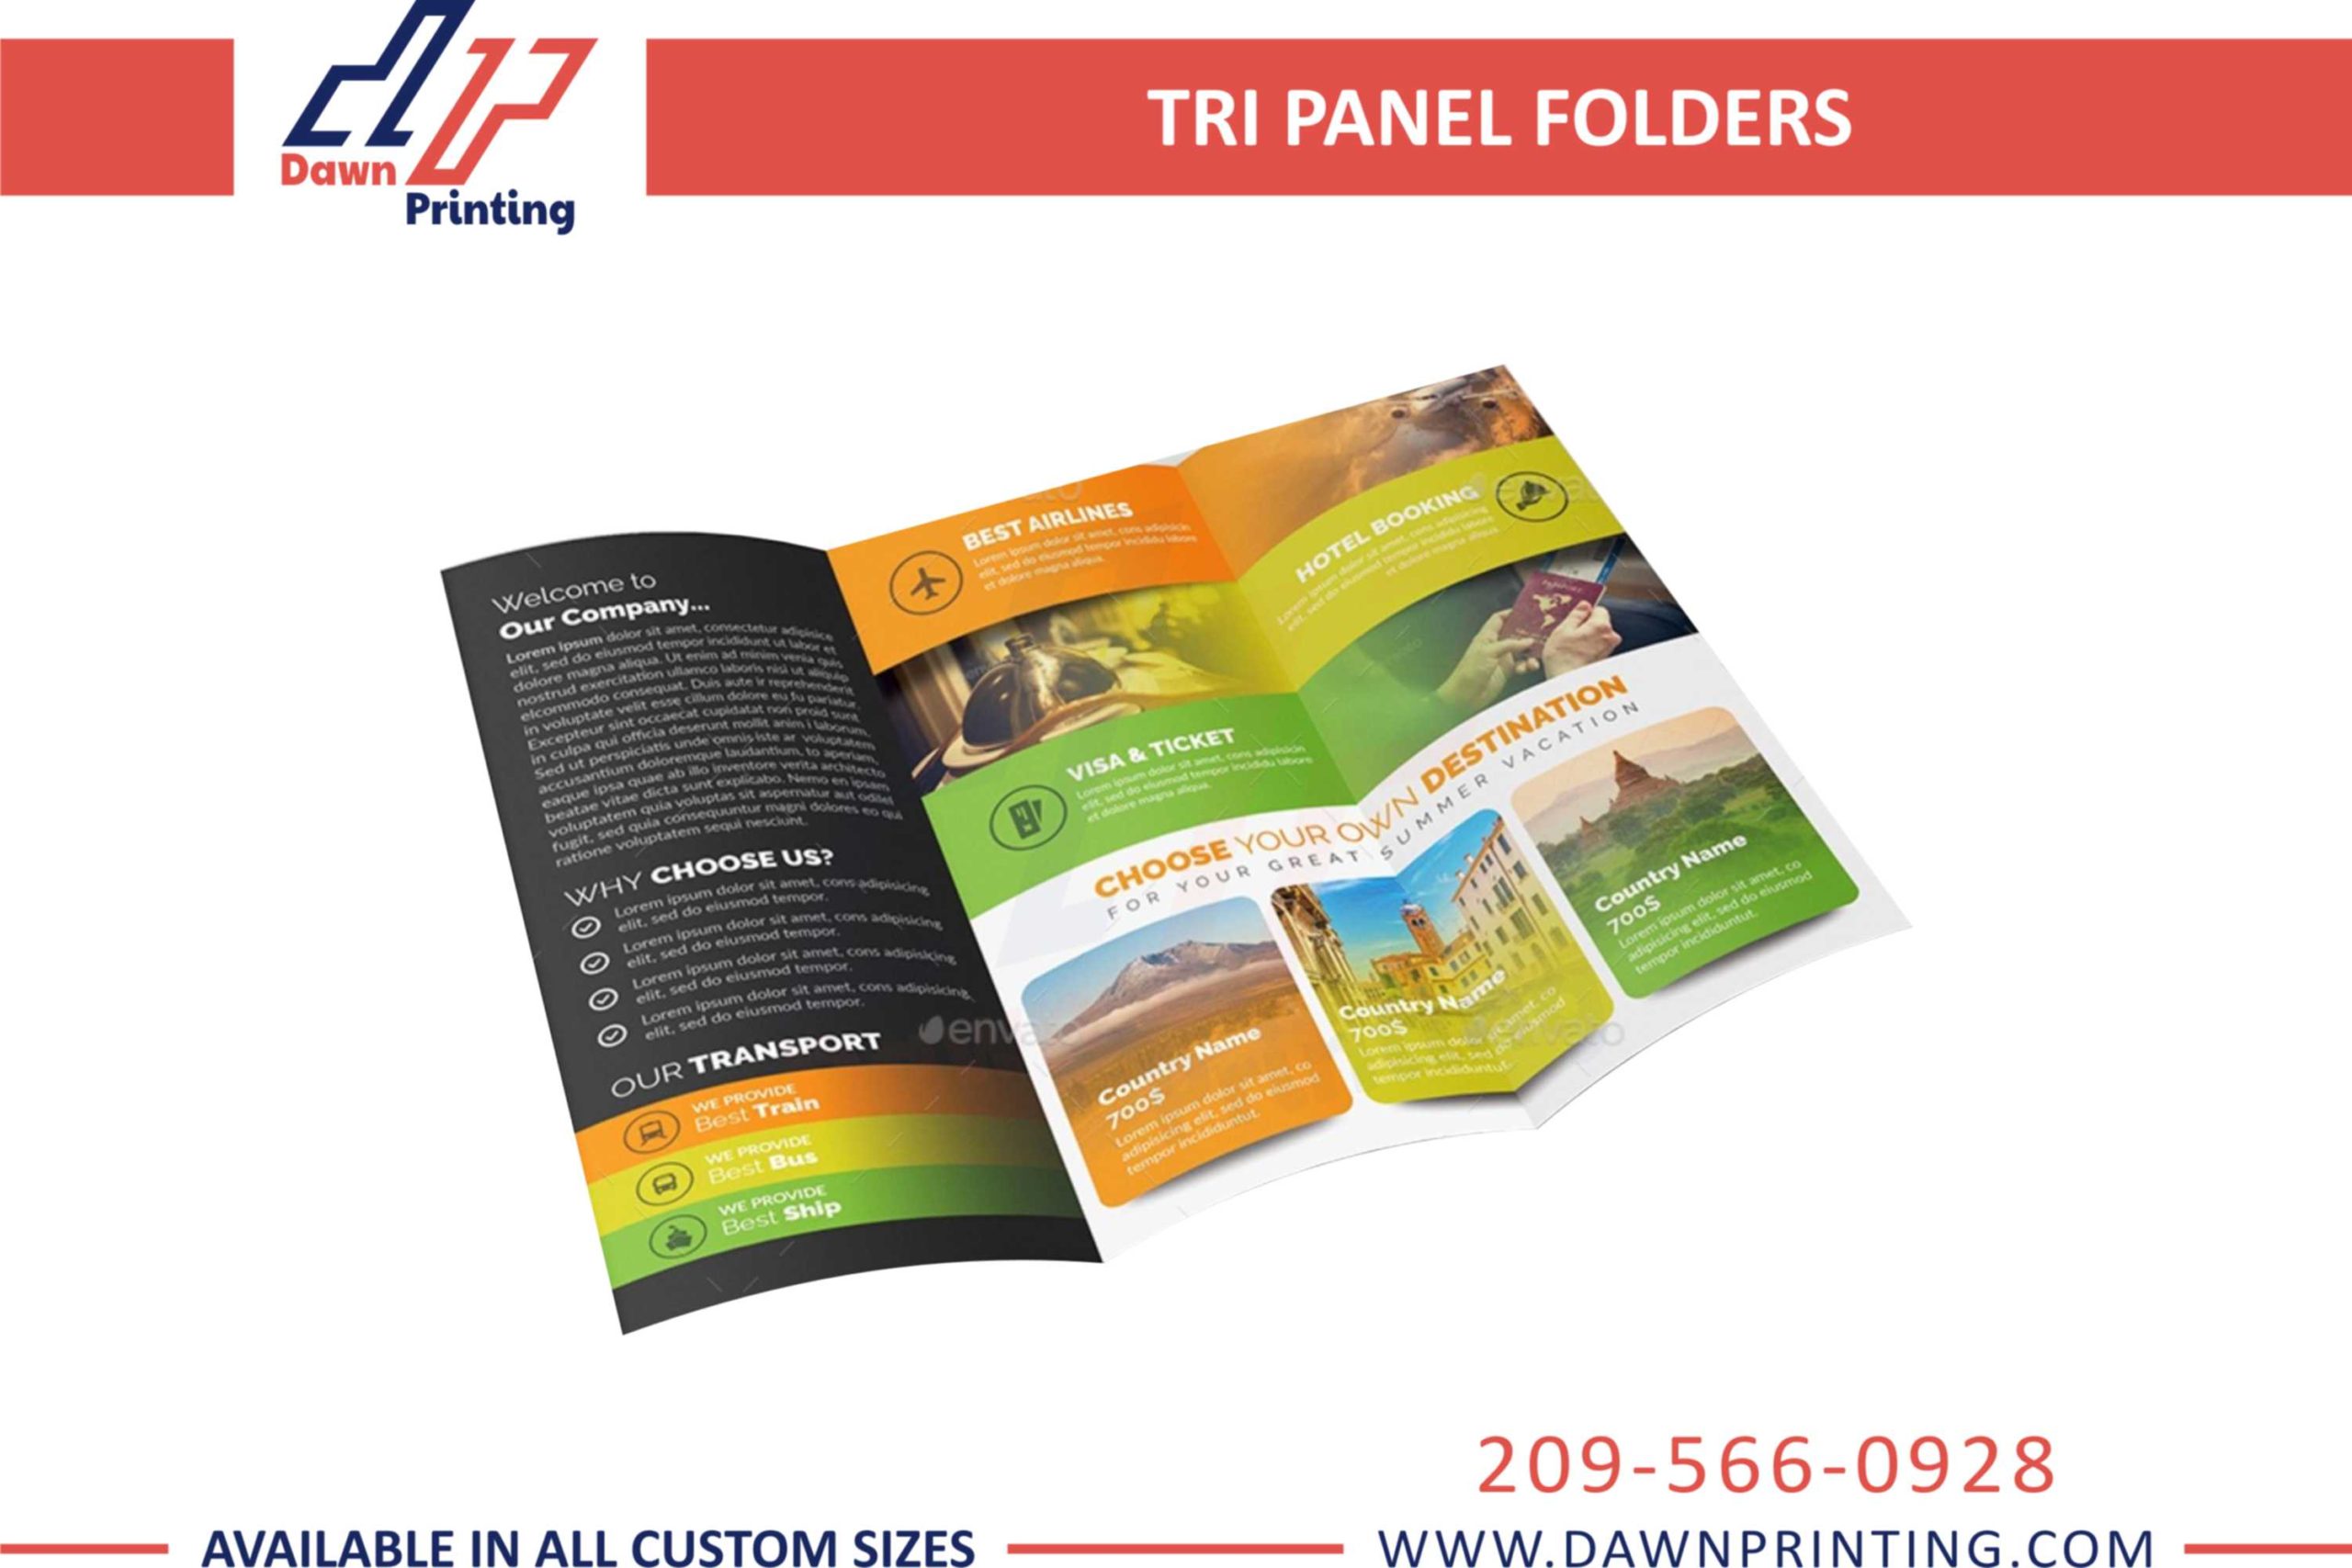 Custom Printed Tri Panel Folders - Dawn Printing